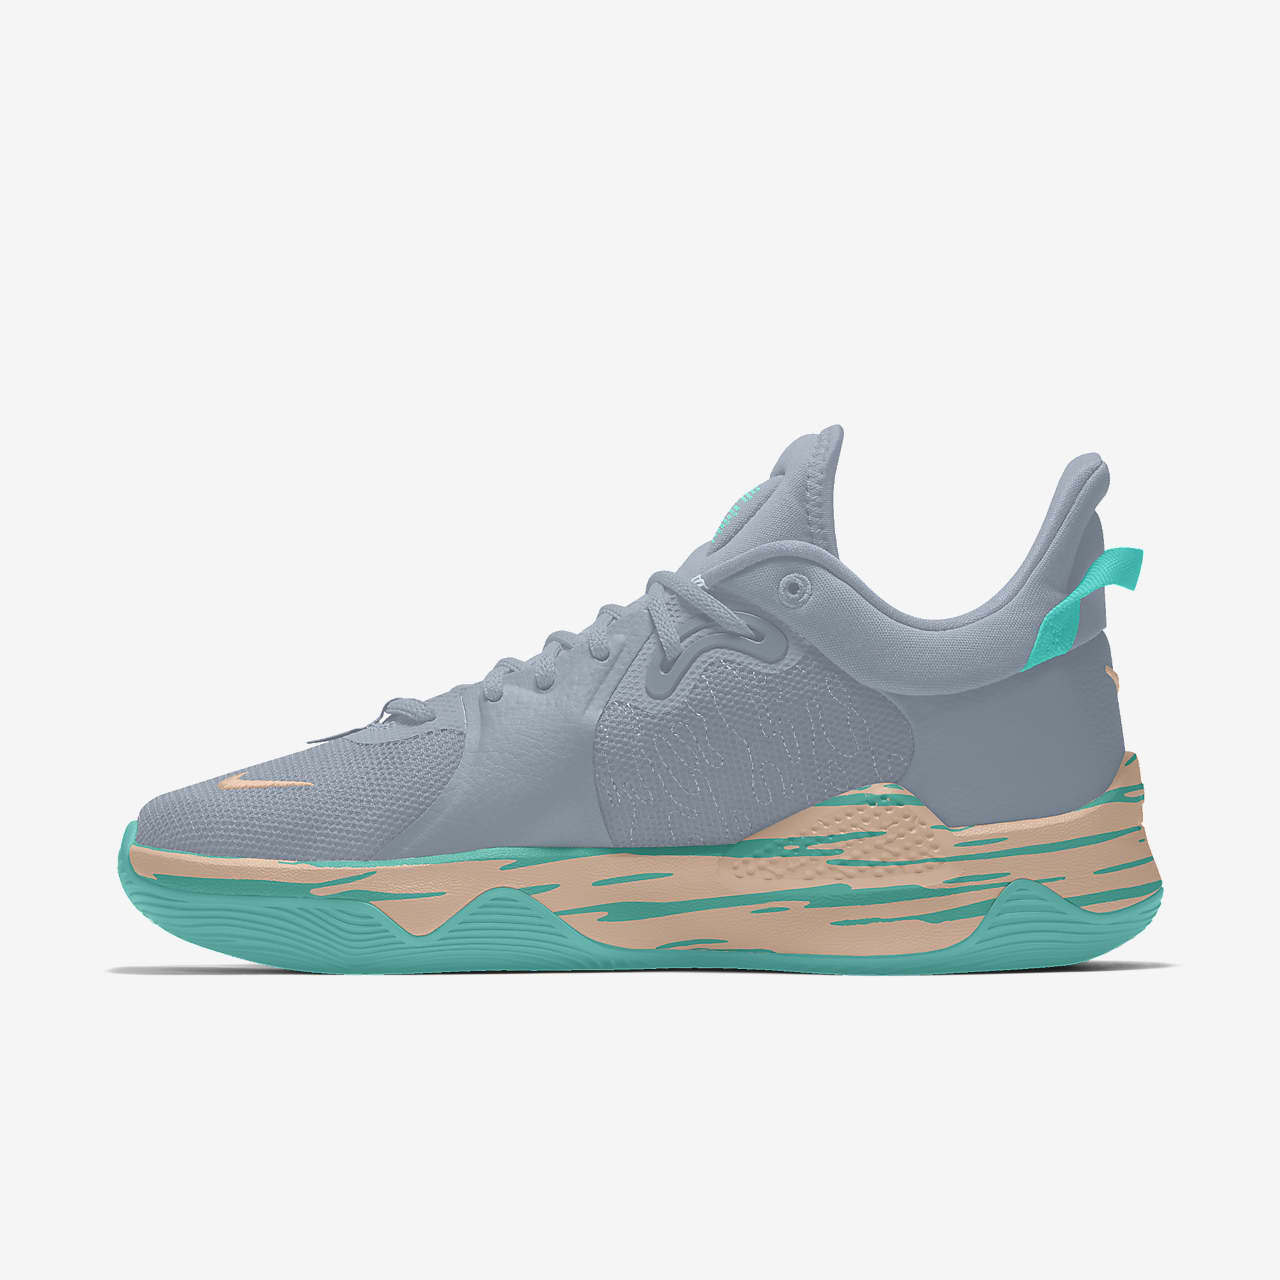 PG 5 By You Custom Basketball Shoe 